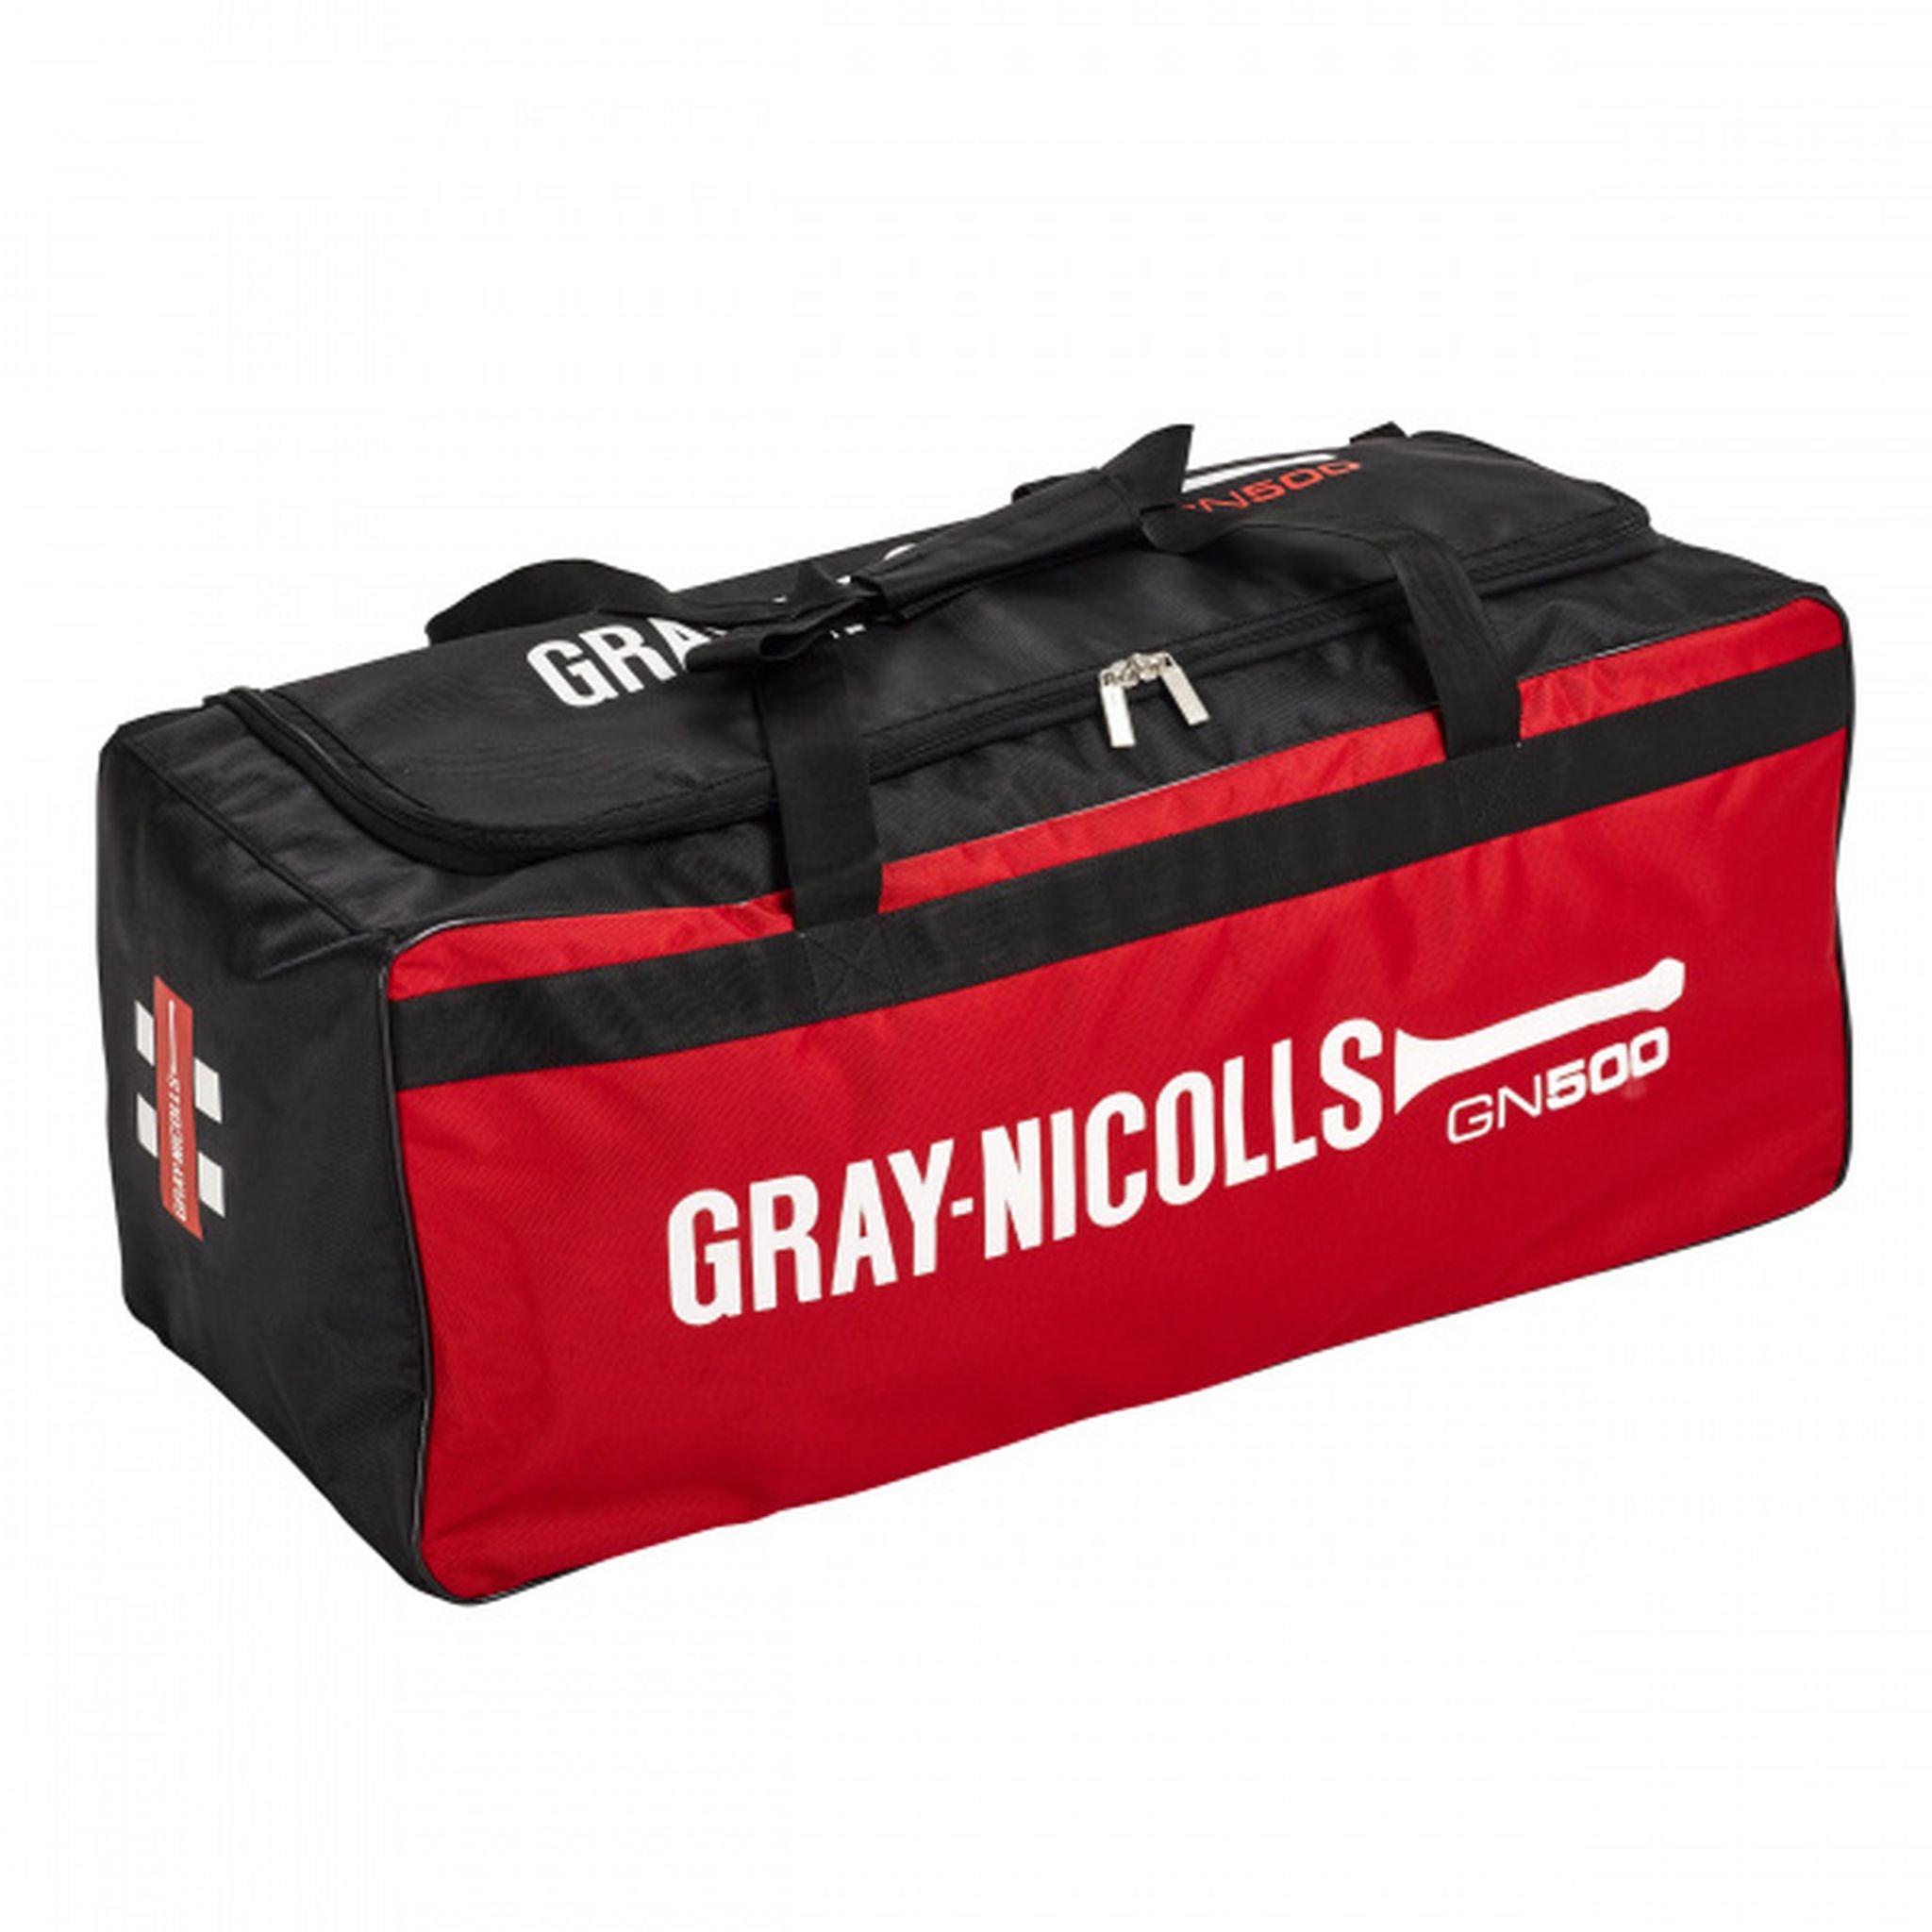 Gray-Nicolls GN 500 Cricket Bag